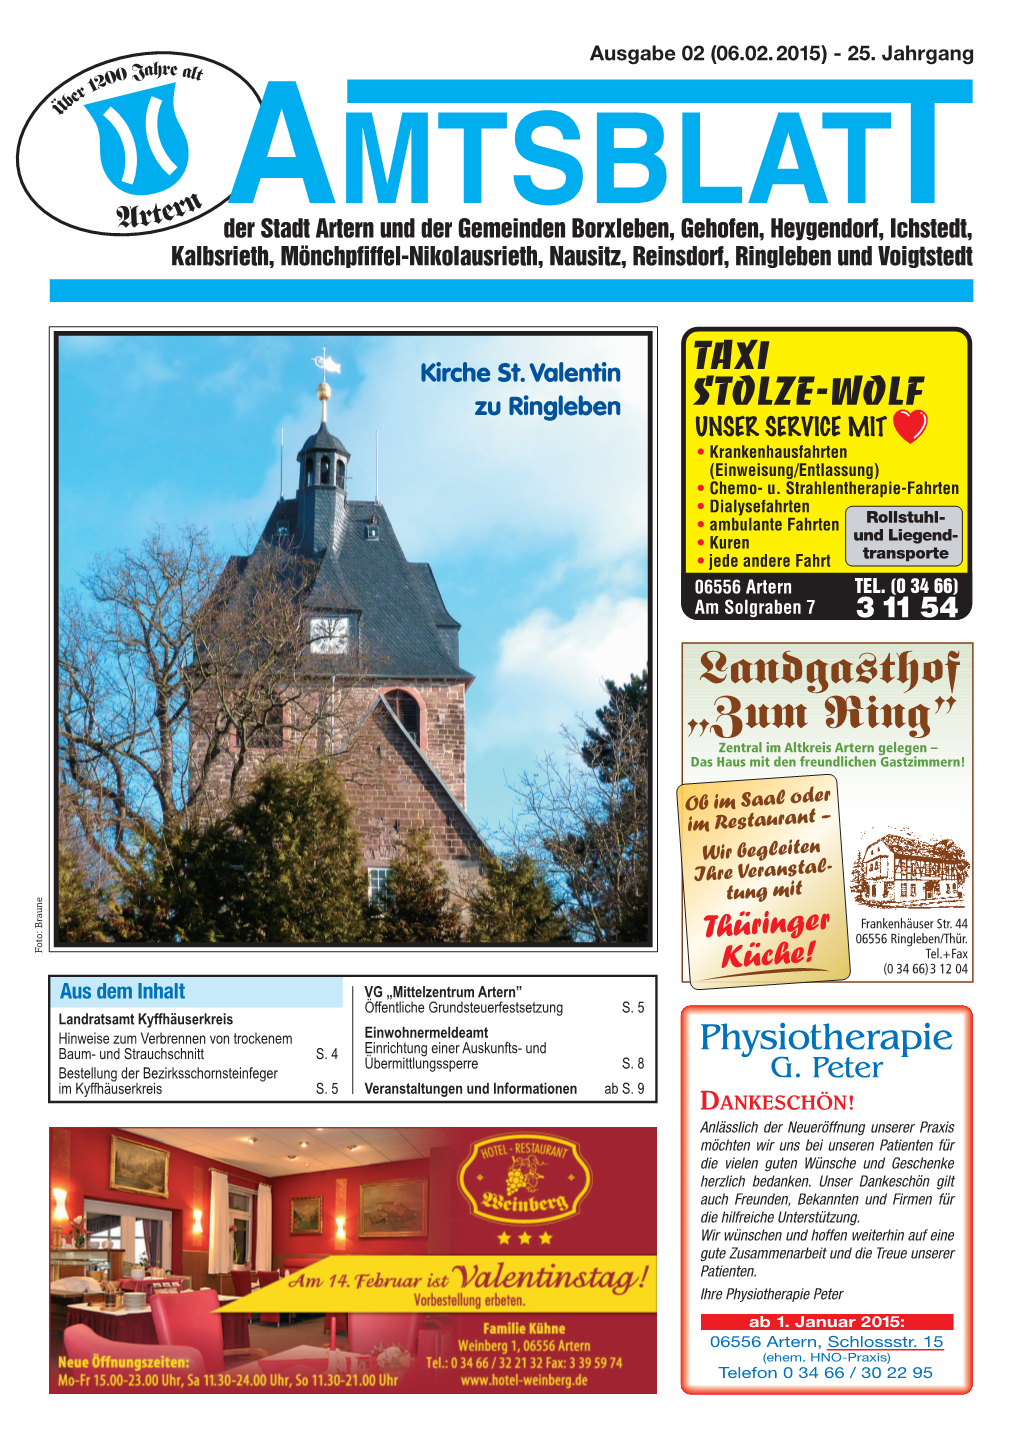 1 Amtsblatt Ausgabe 02 (06.02.2015)